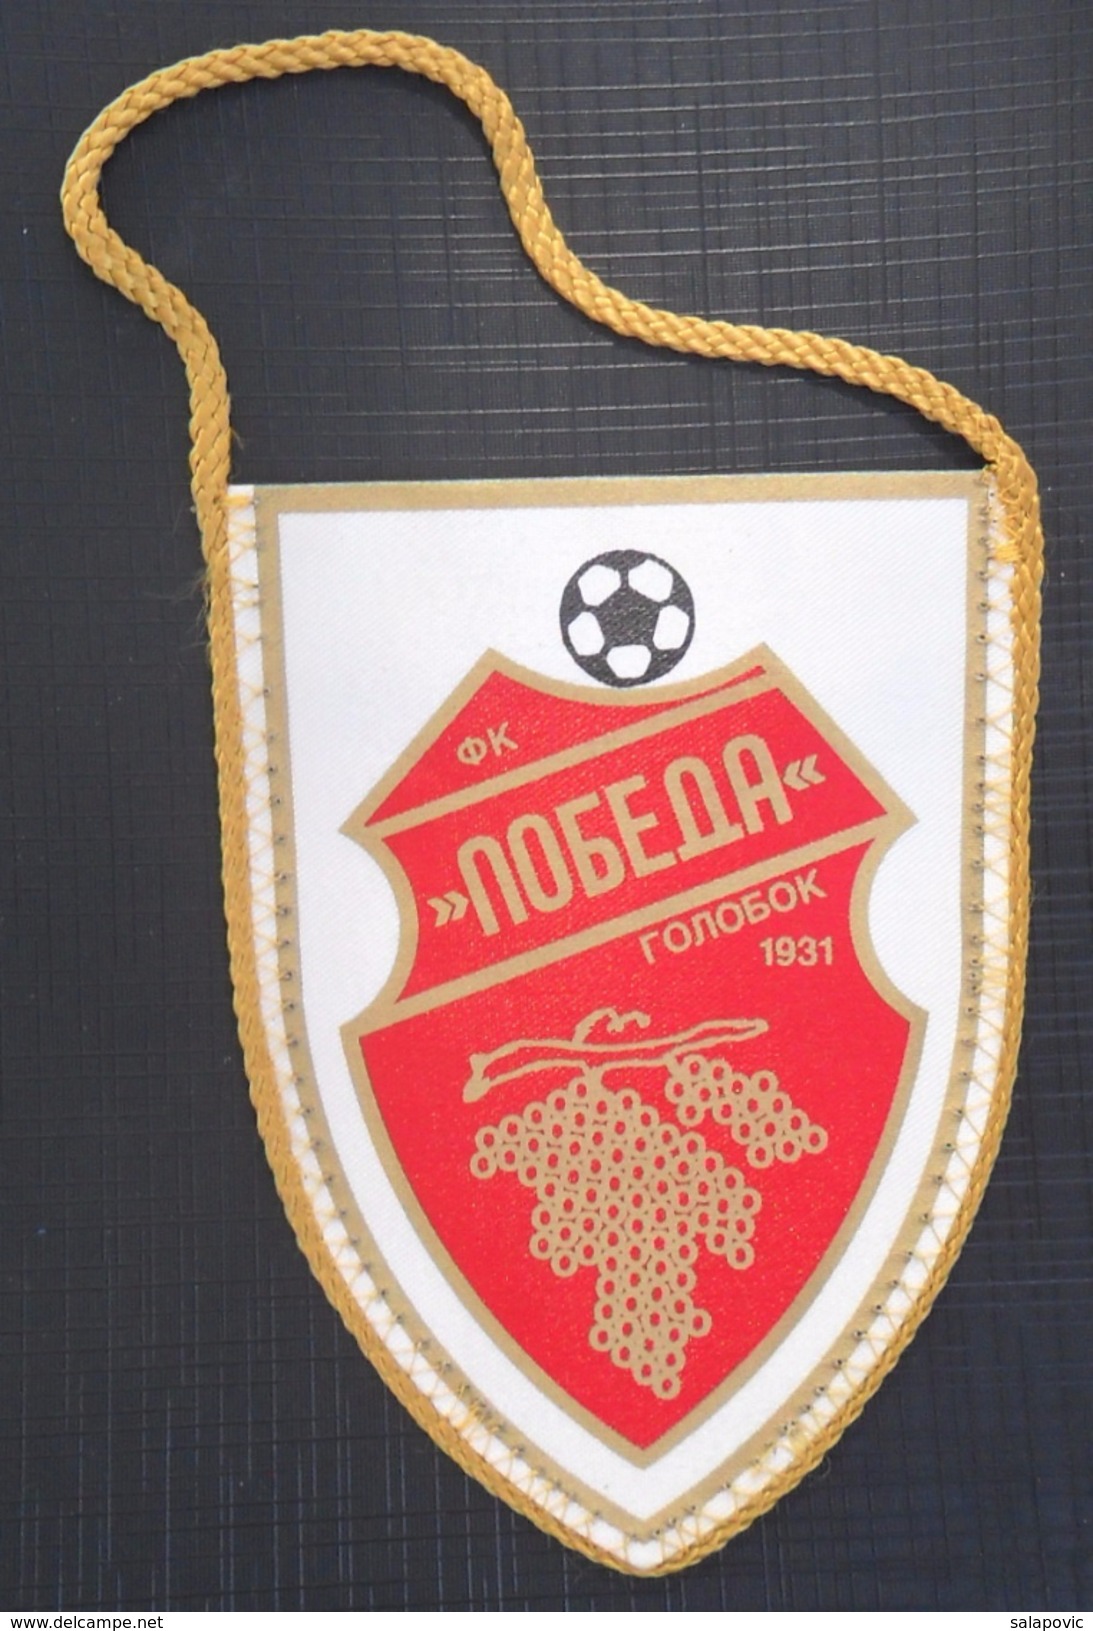 FK Pobeda Golobok, SERBIA FOOTBALL CLUB, CALCIO OLD PENNANT, SPORTS FLAG - Kleding, Souvenirs & Andere